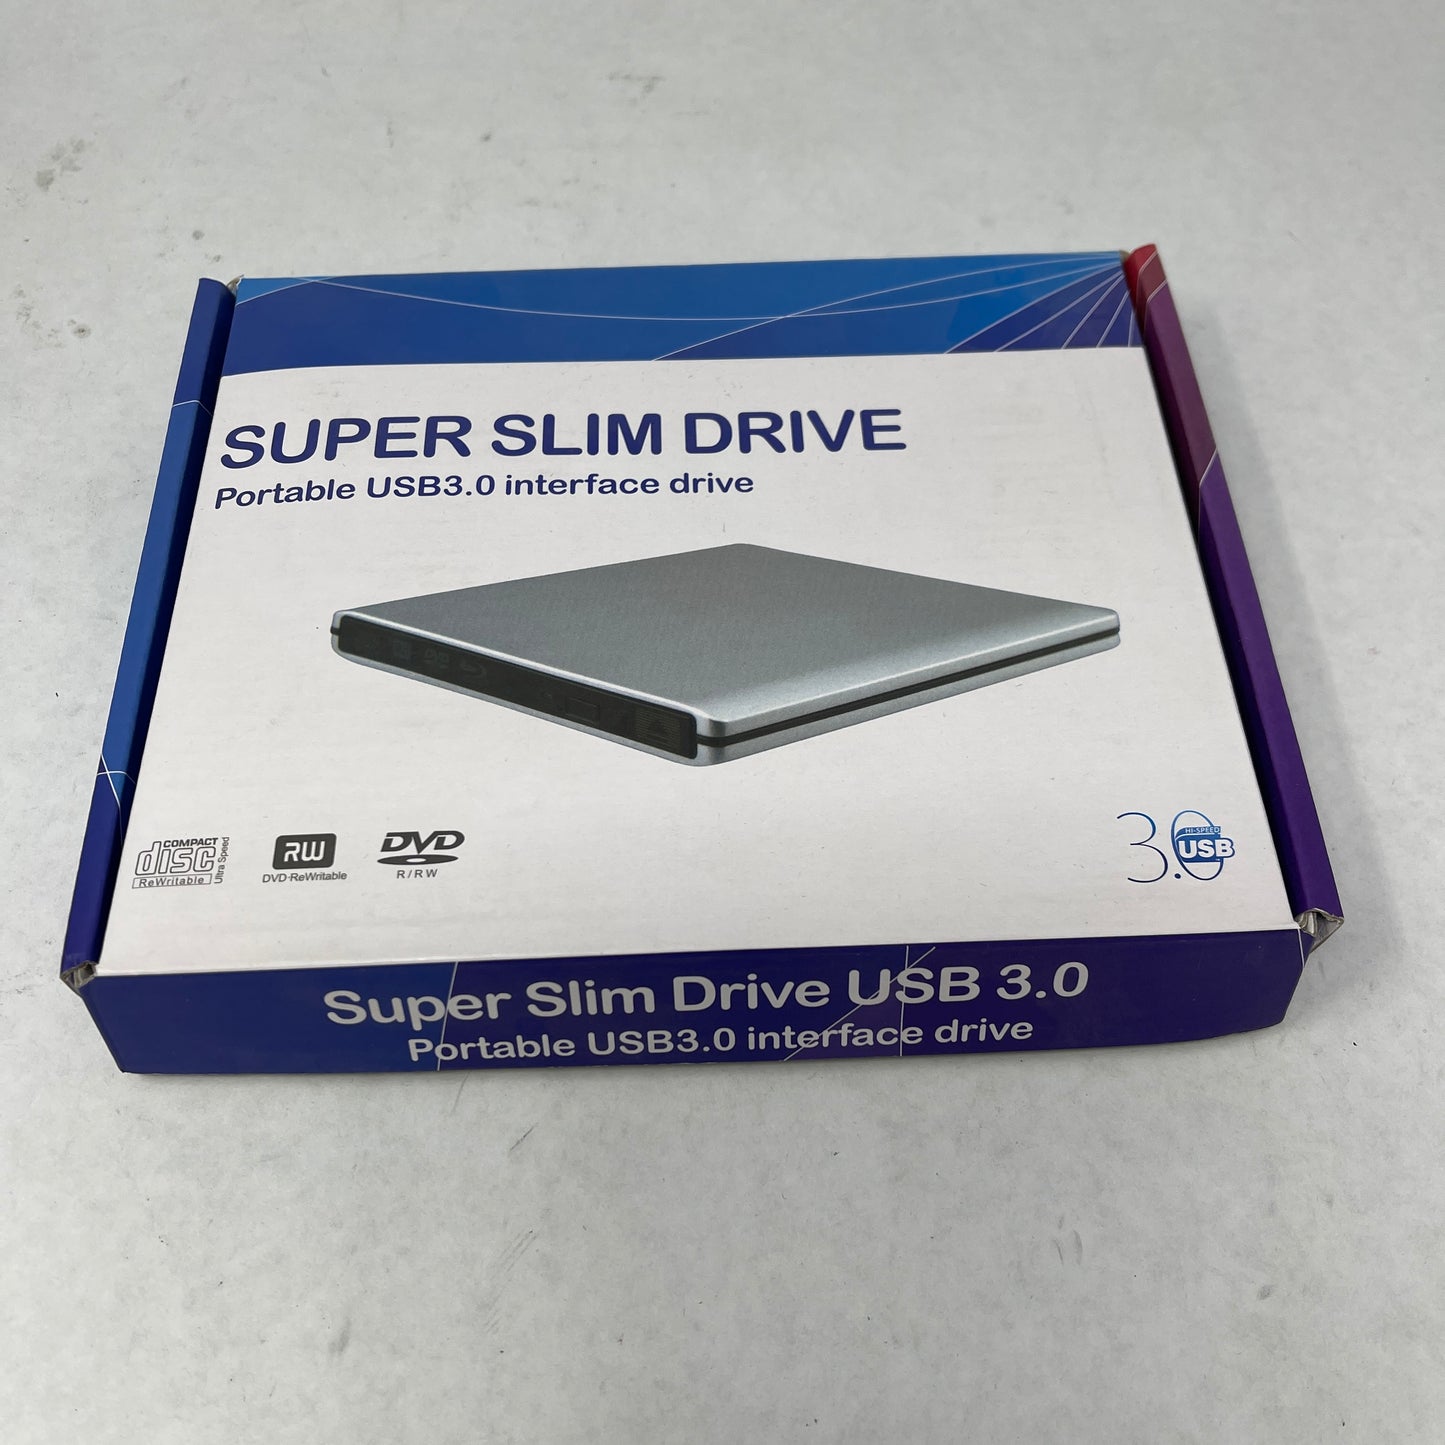 Super Slim Drive - USB 3.0